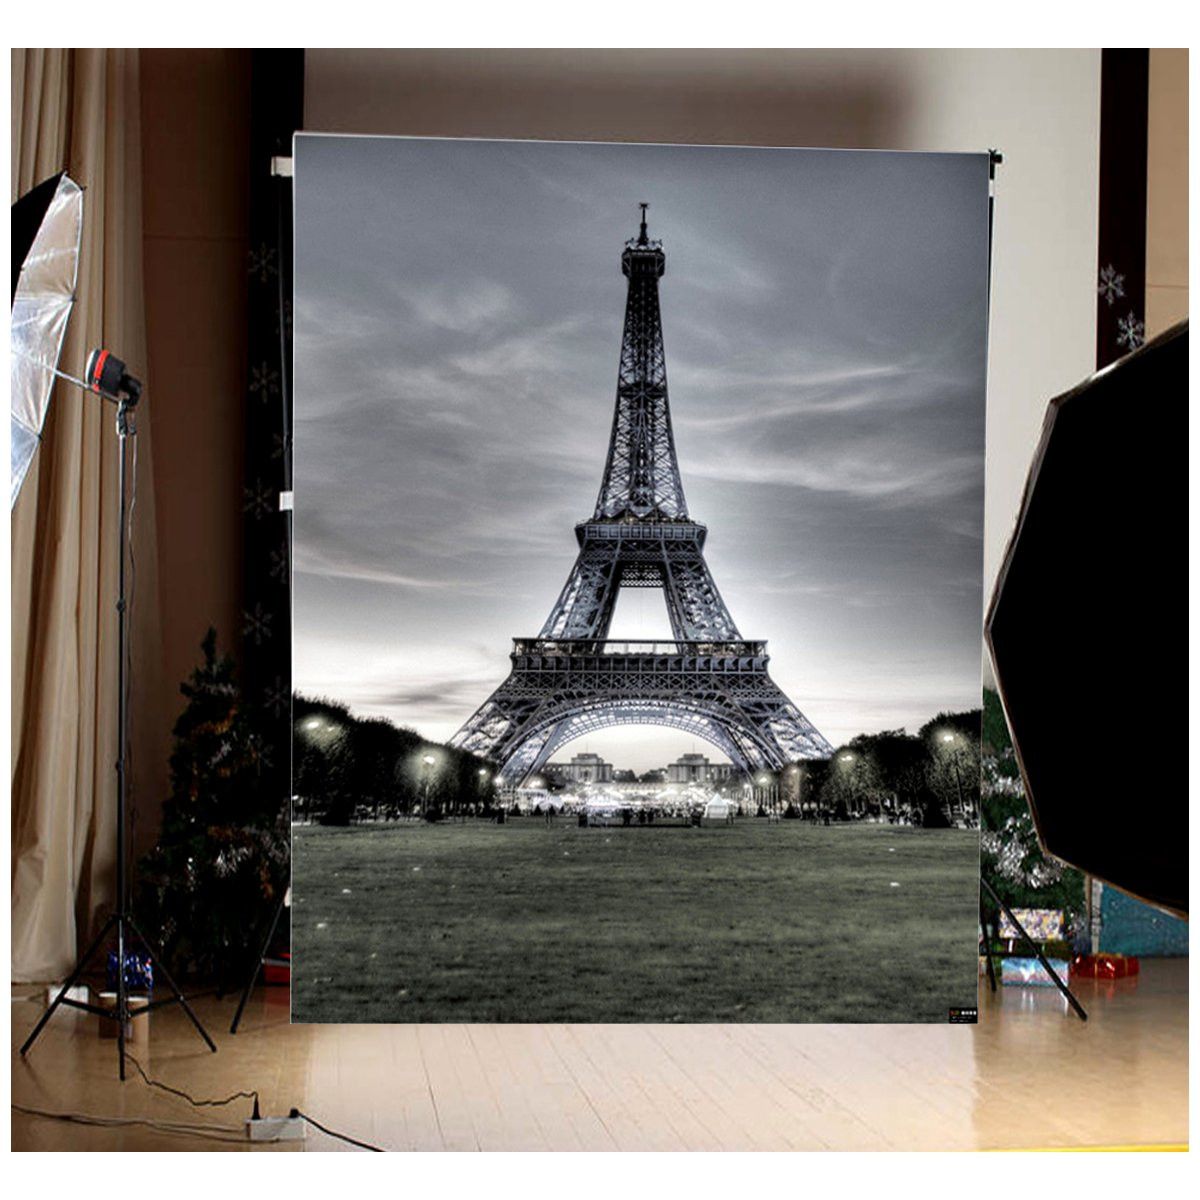 3x5FT-Vinyl-Eiffel-Tower-Background-Photo-Studio-Prop-Photography-backdrop-1164078